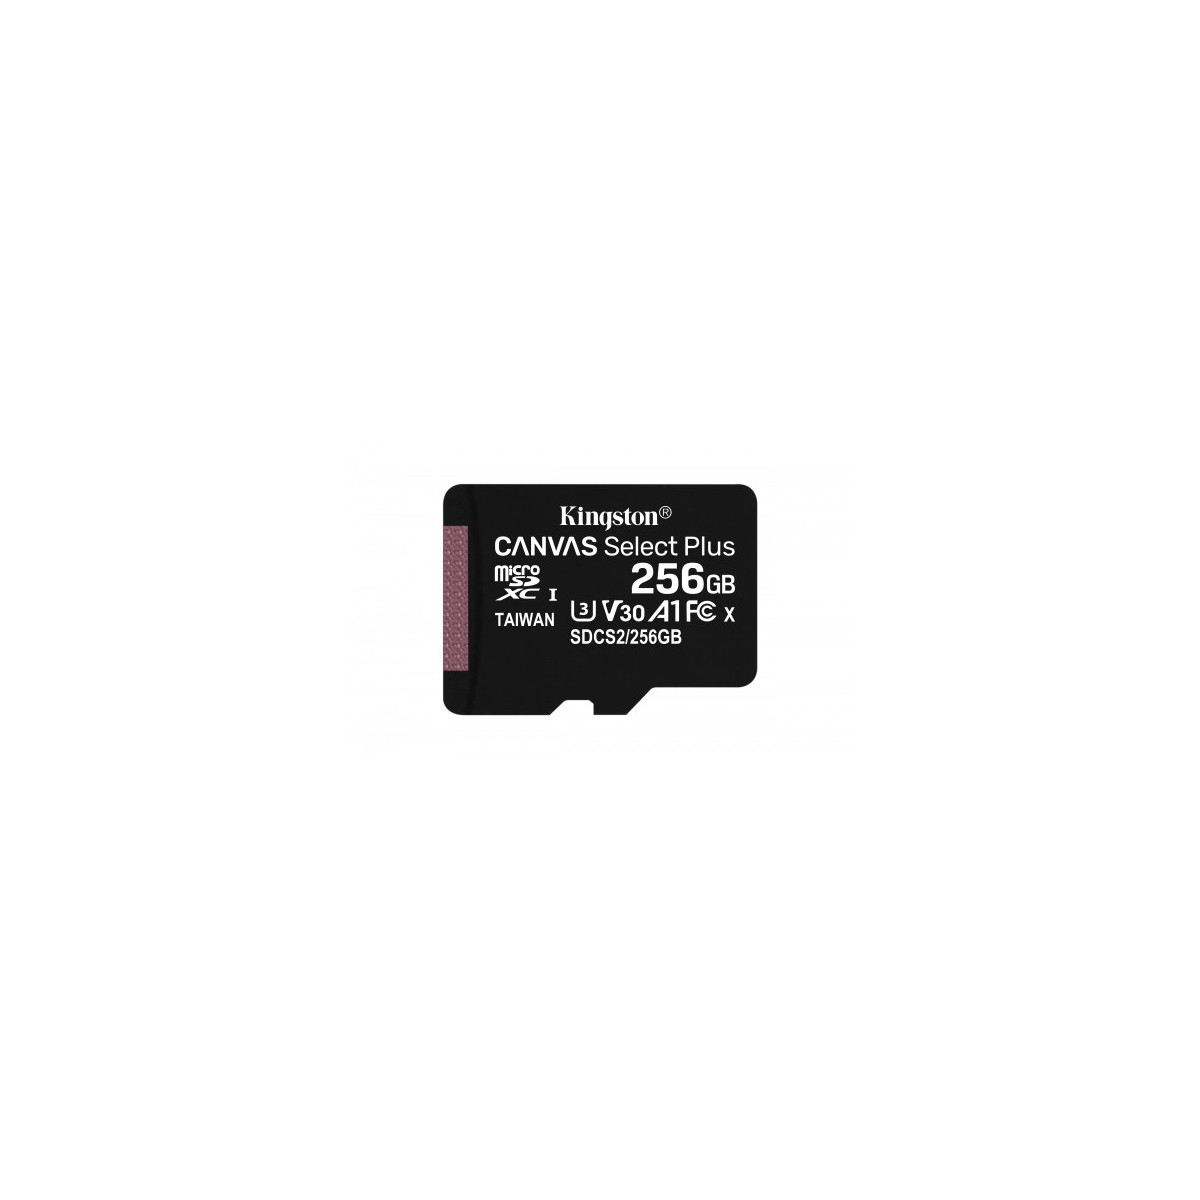 Kingston Technology Canvas Select Plus memoria flash 256 GB MicroSDXC Clase 10 UHS I